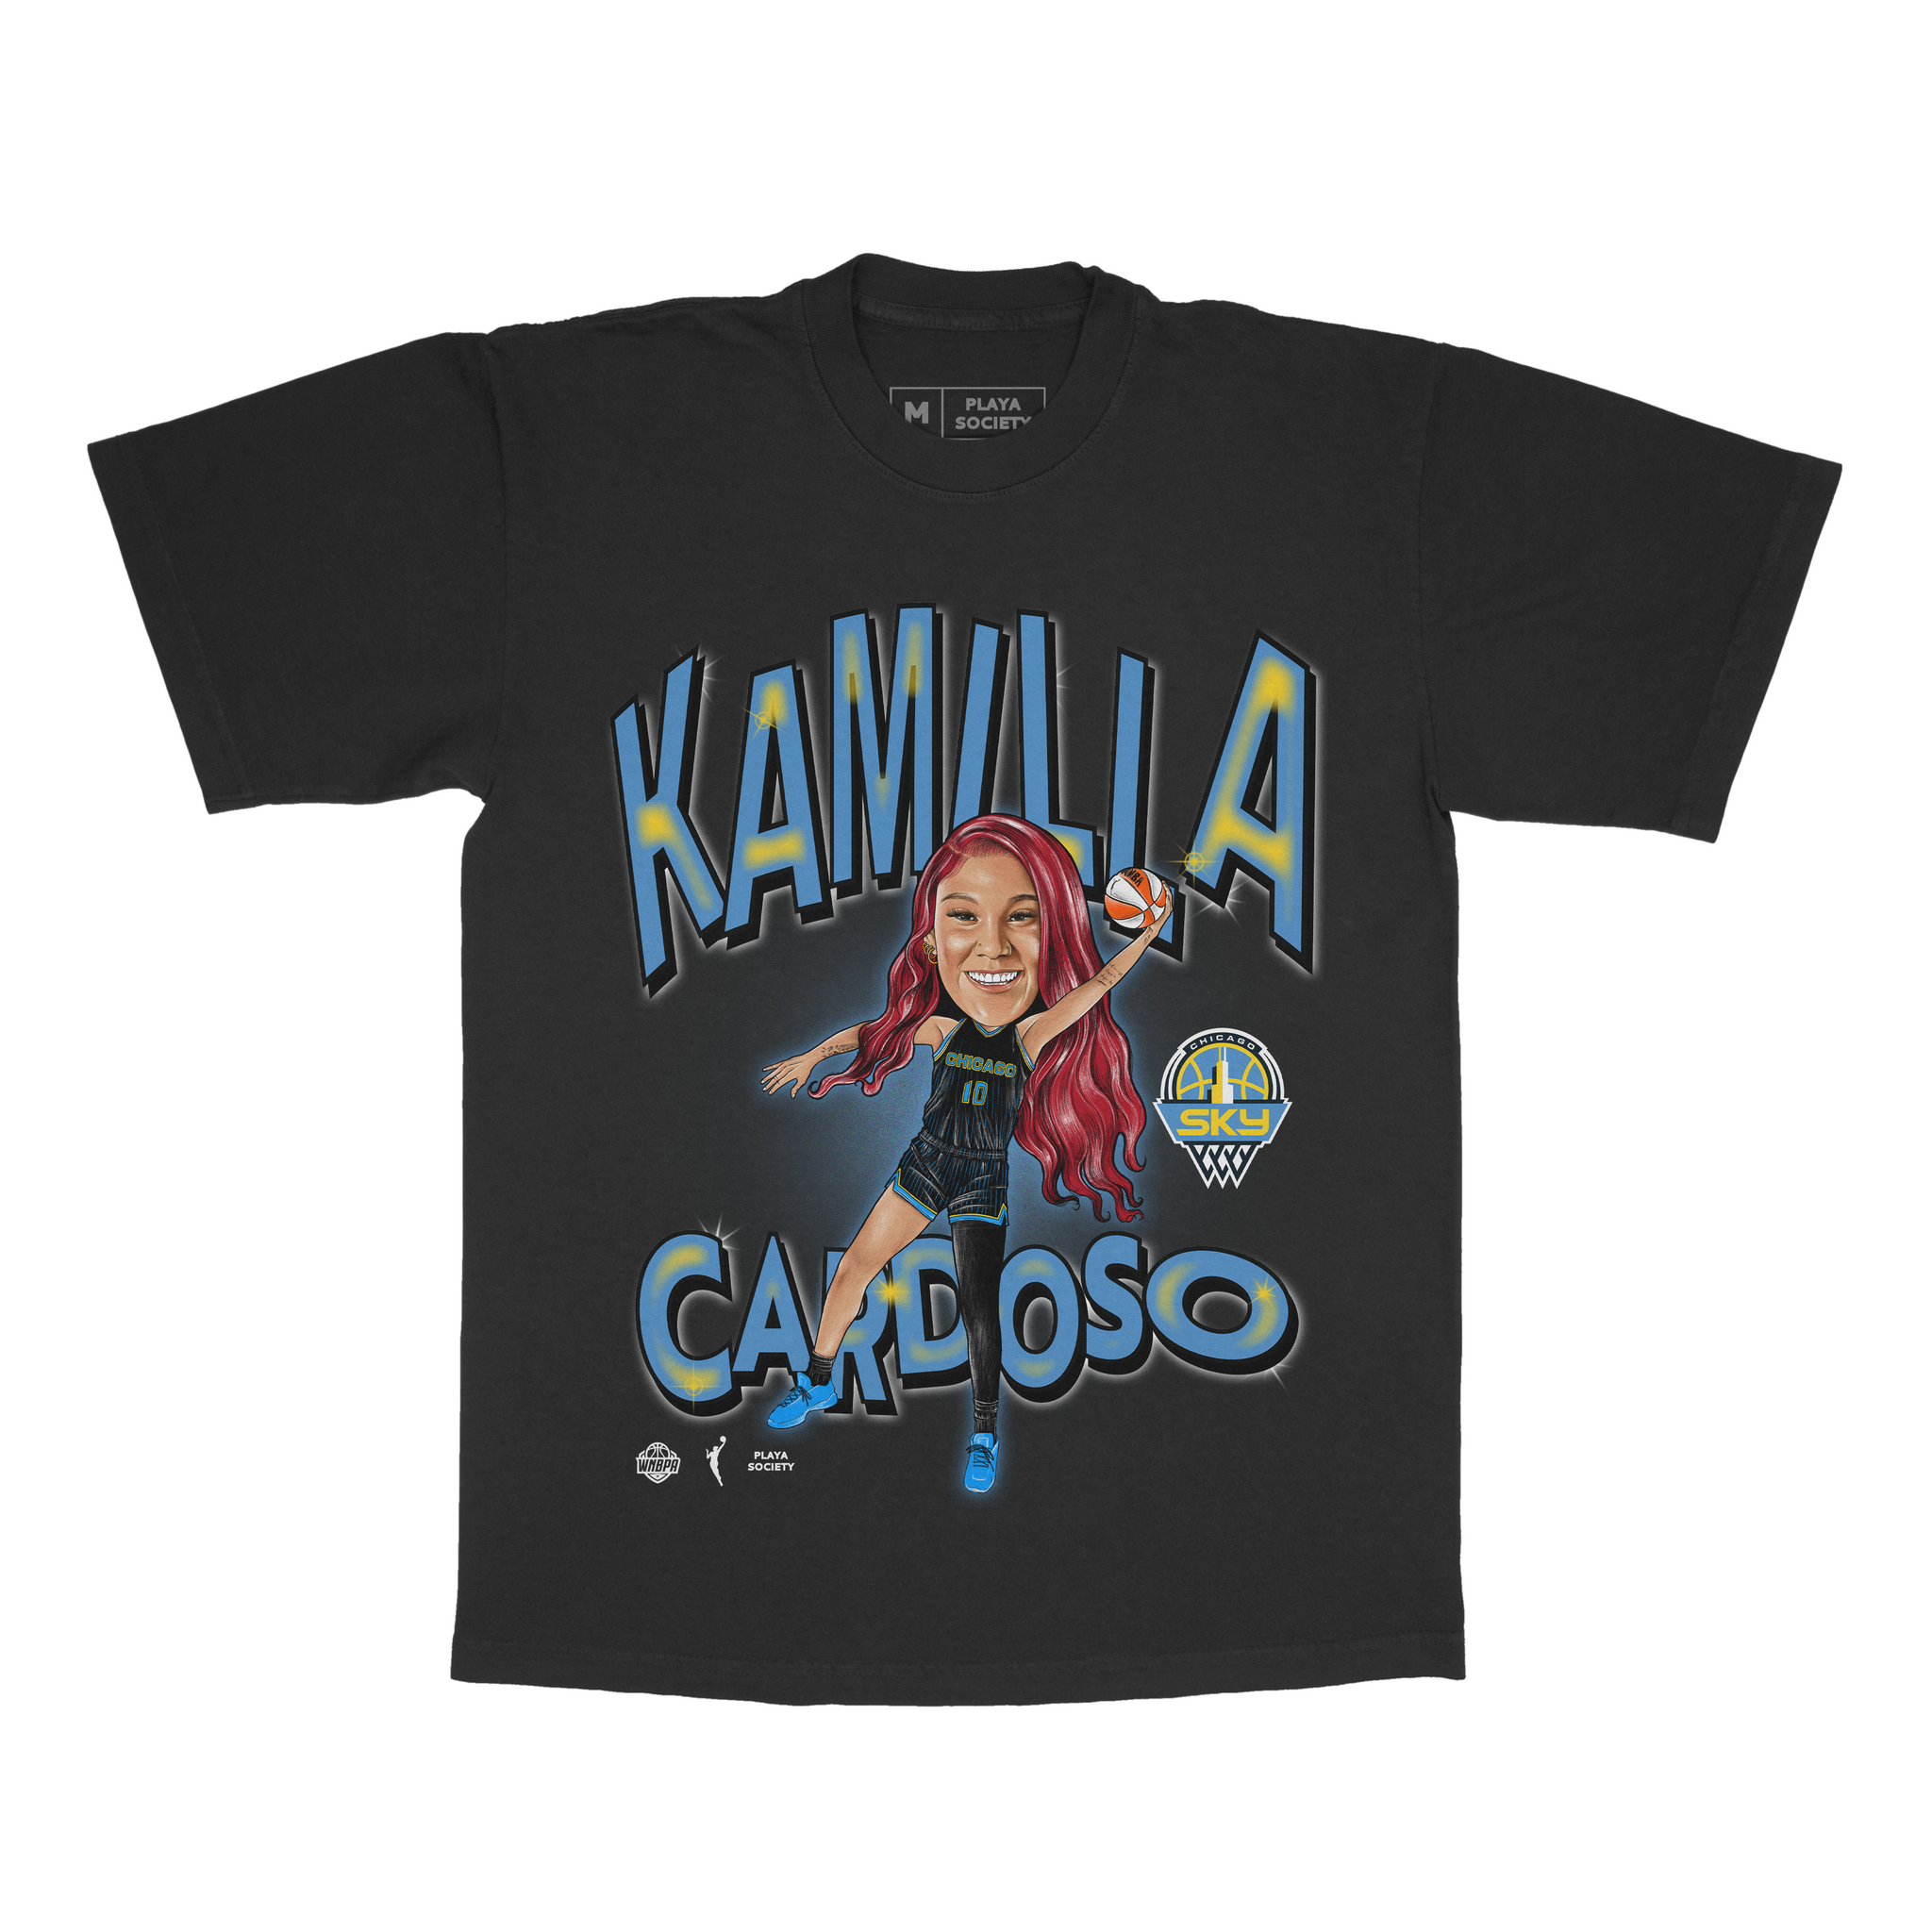 Playa Society Kamilla Cardoso T-shirt